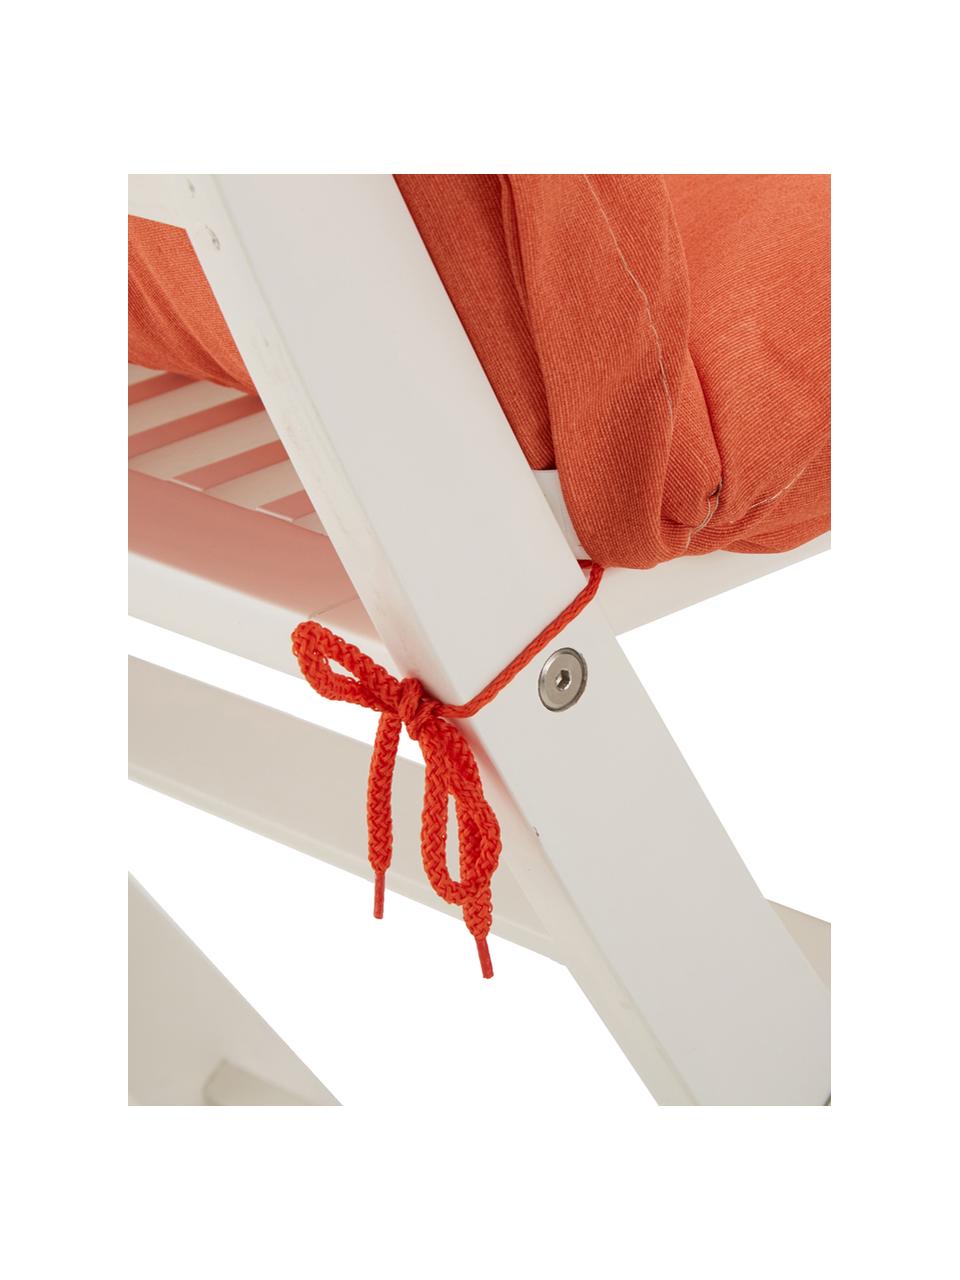 Einfarbige Hochlehner-Stuhlauflage Panama in Orange, Bezug: 50% Baumwolle, 45% Polyes, Orange, 50 x 123 cm